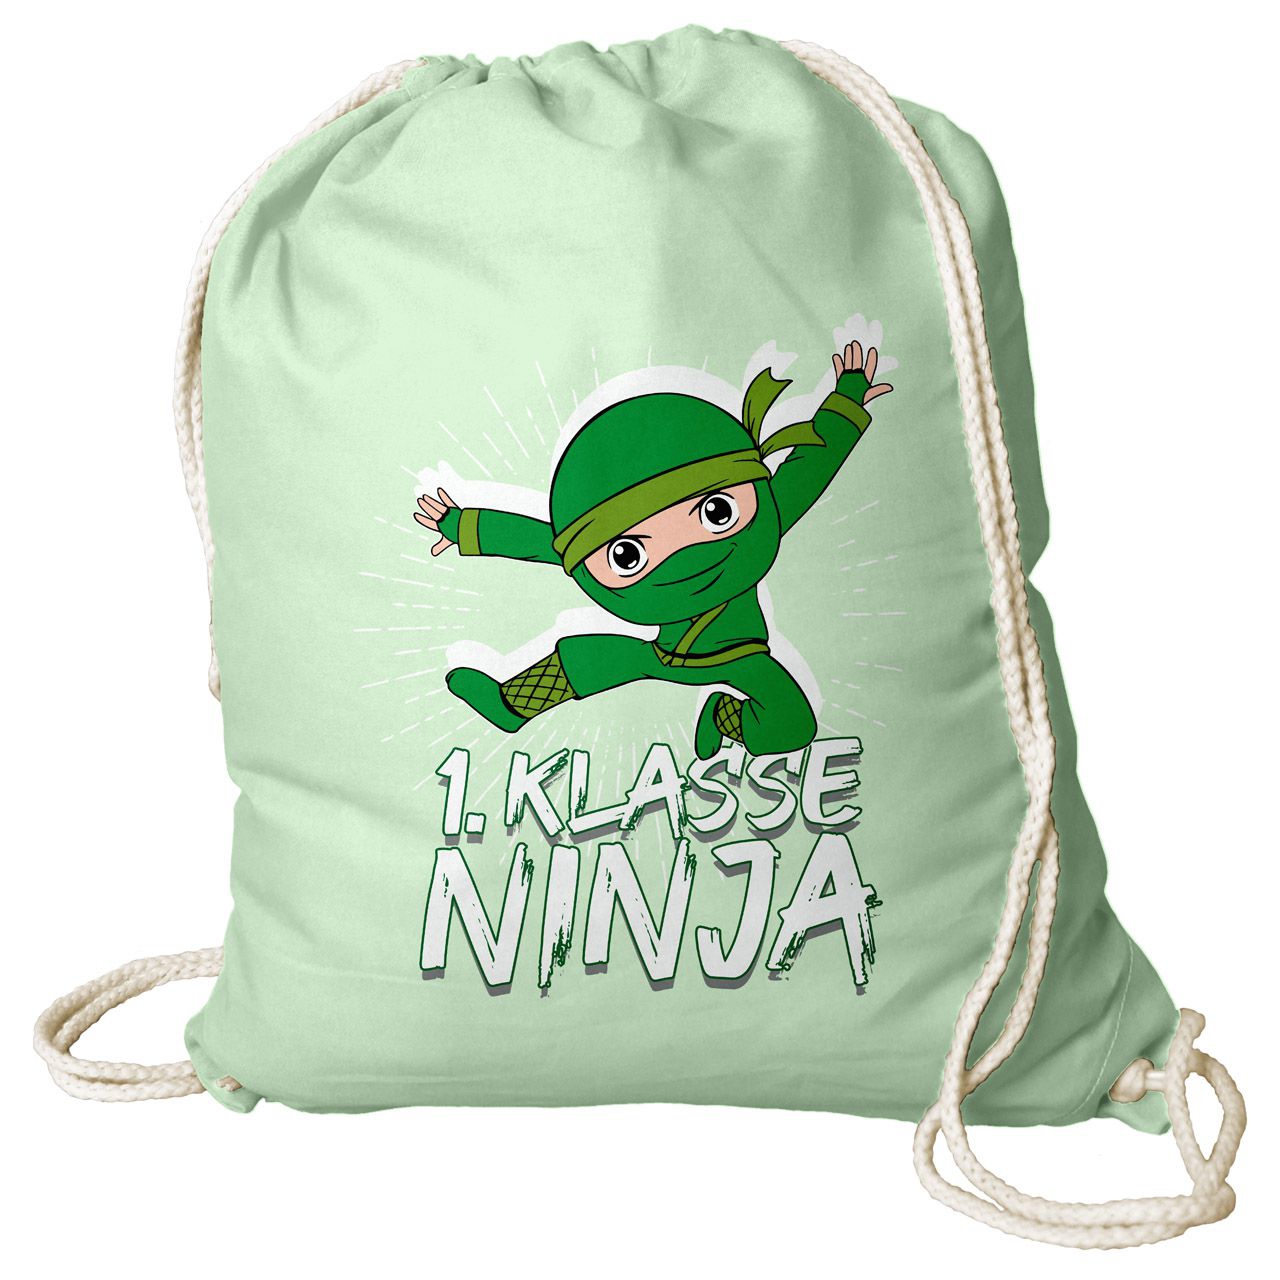 1. Klasse Ninja grün Rucksack Beutel mint